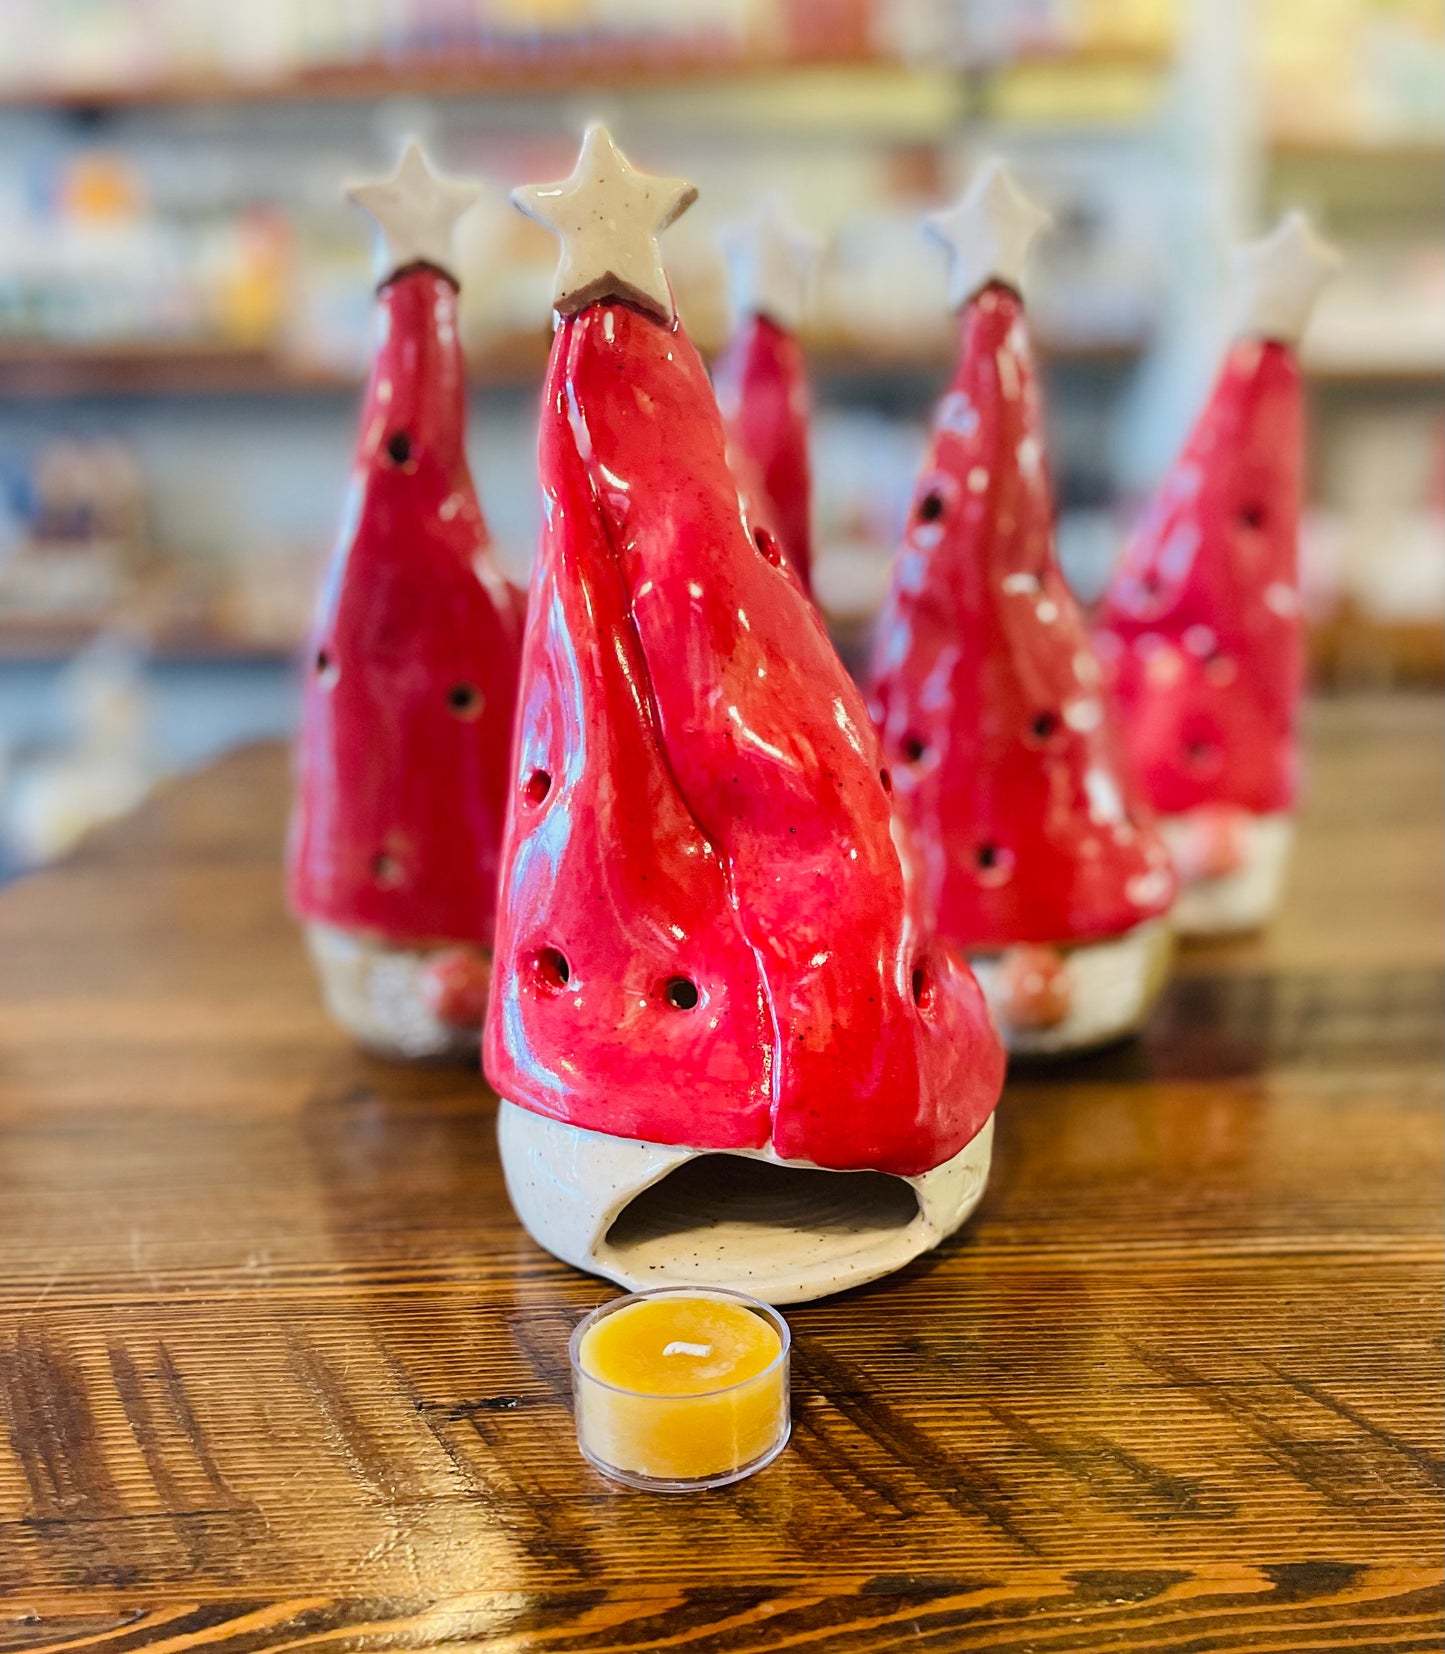 Santa Gnomes with Tea Light